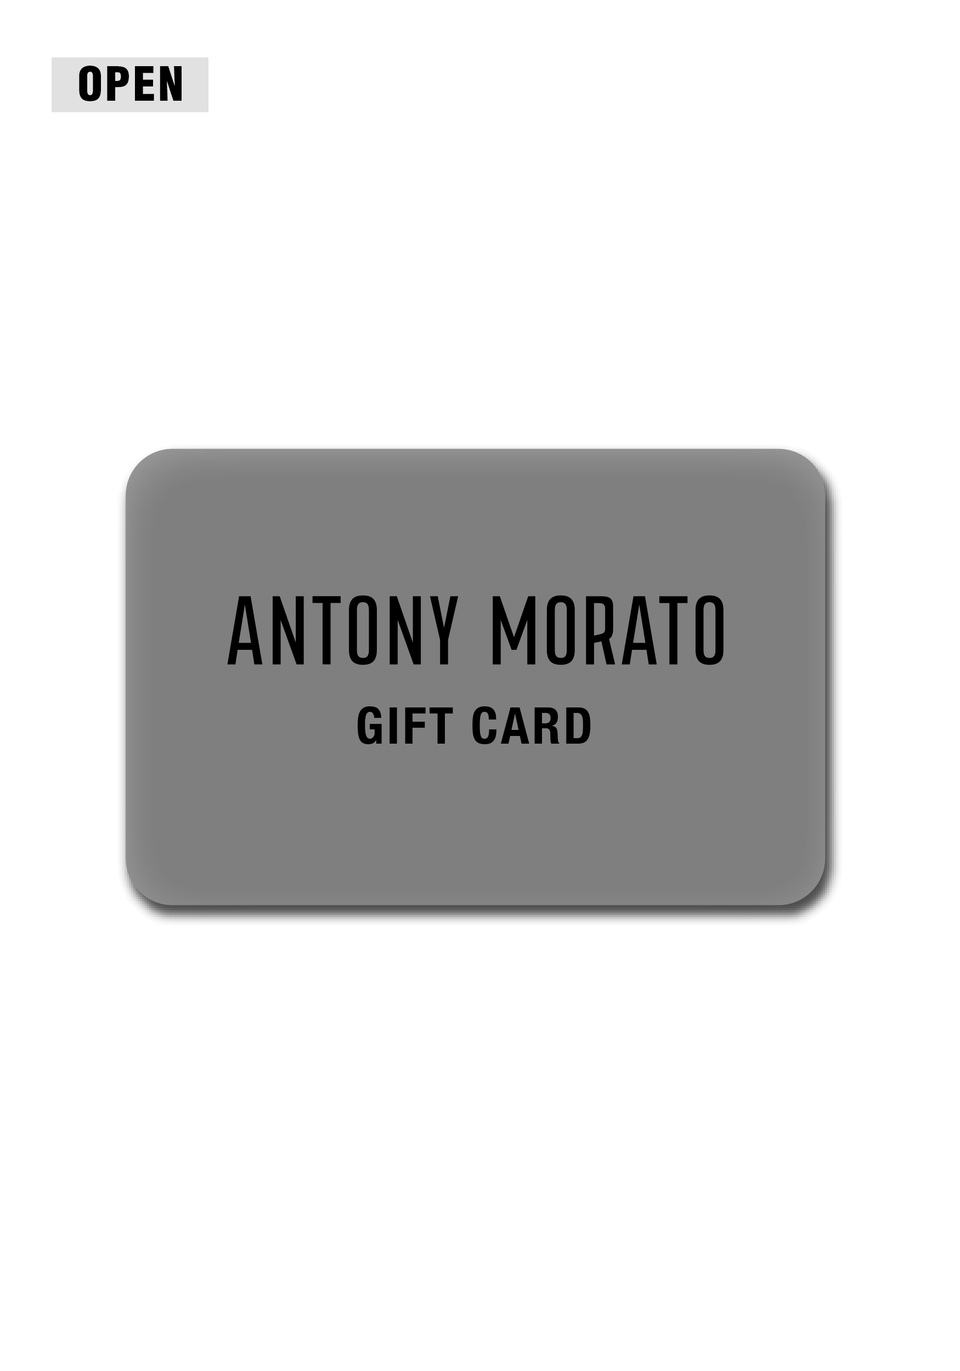 Gift Card Open - Antony Morato Online Shop